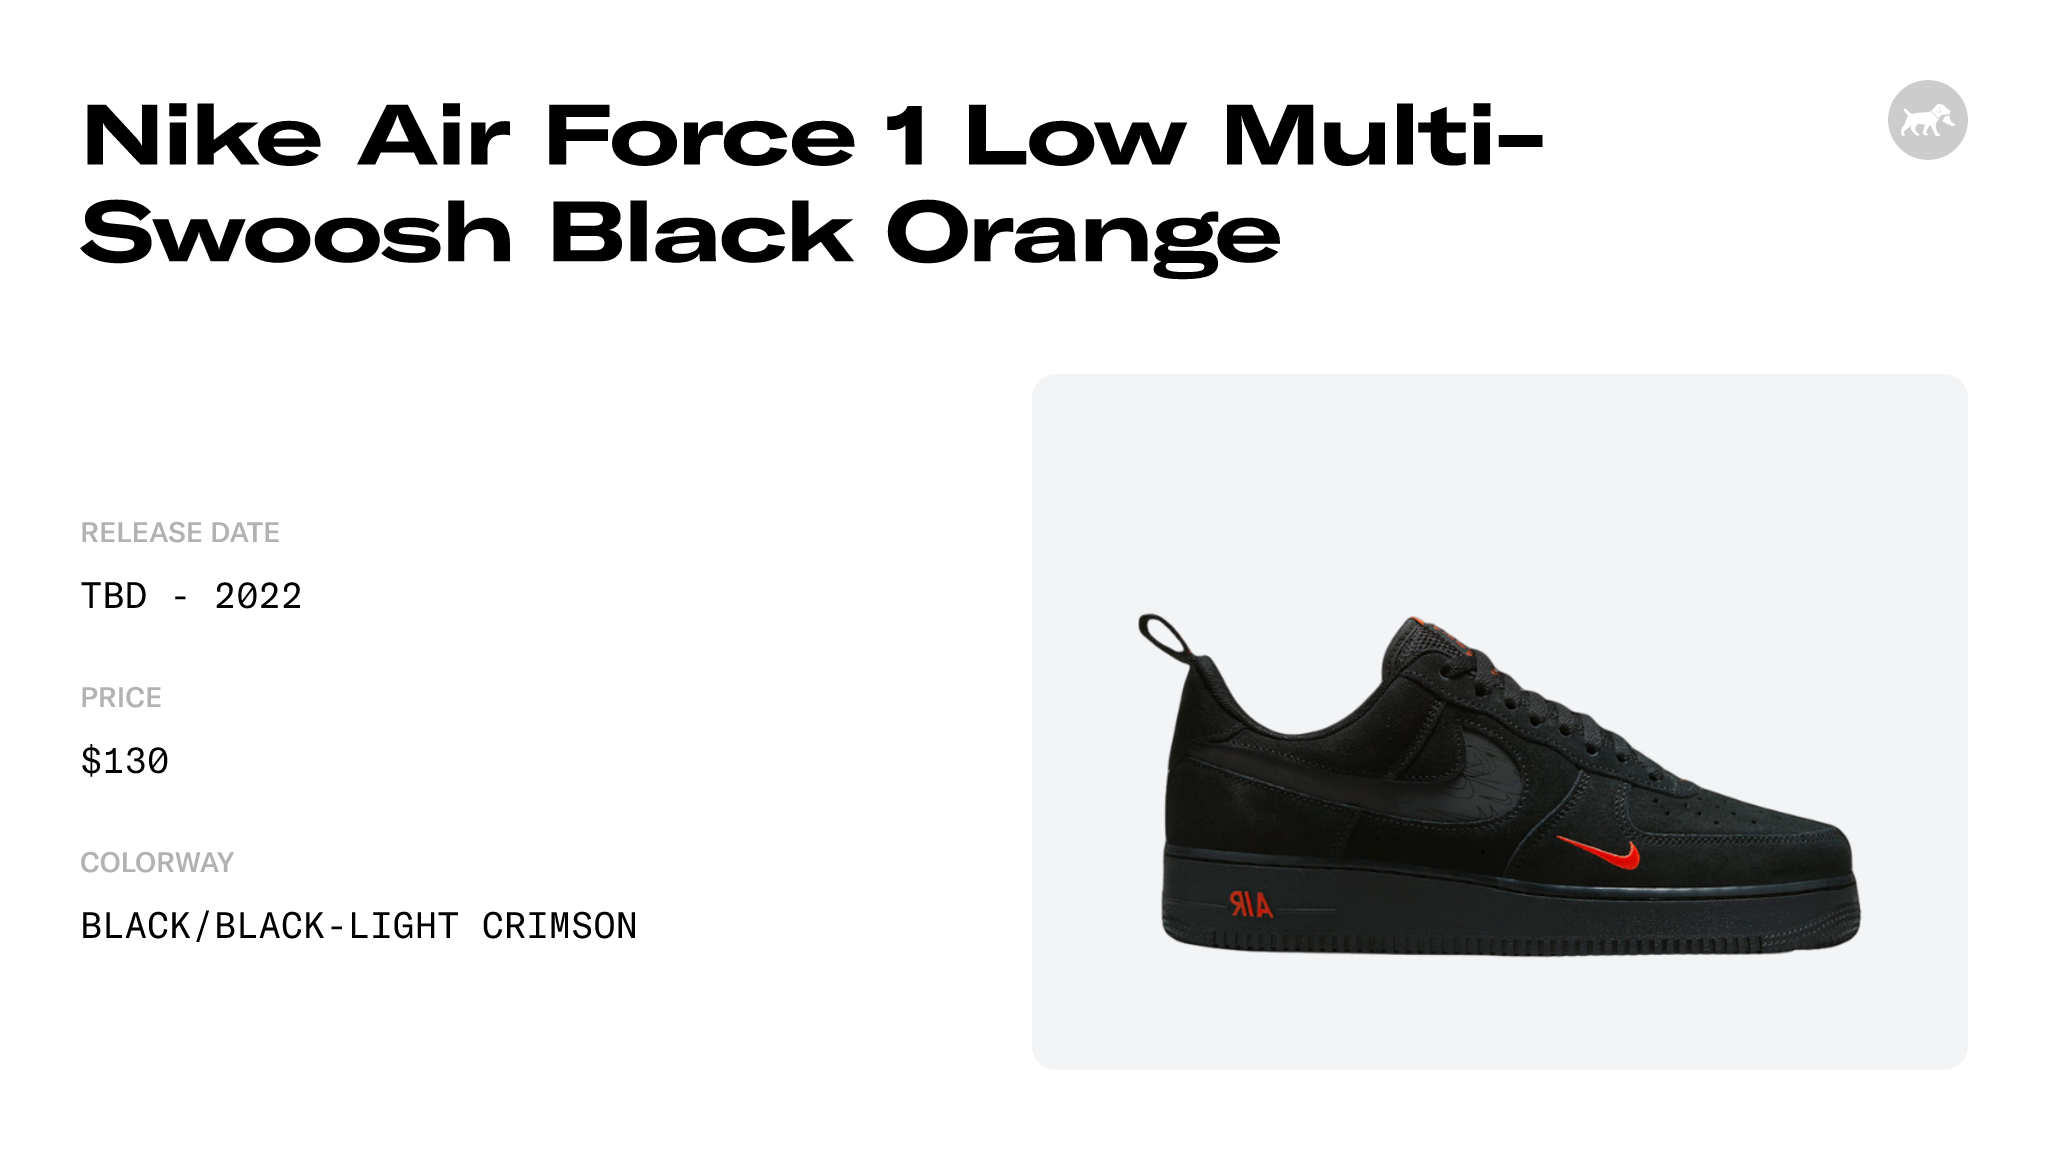 Nike Air Force 1 Low Arrives in Black Suede and Orange